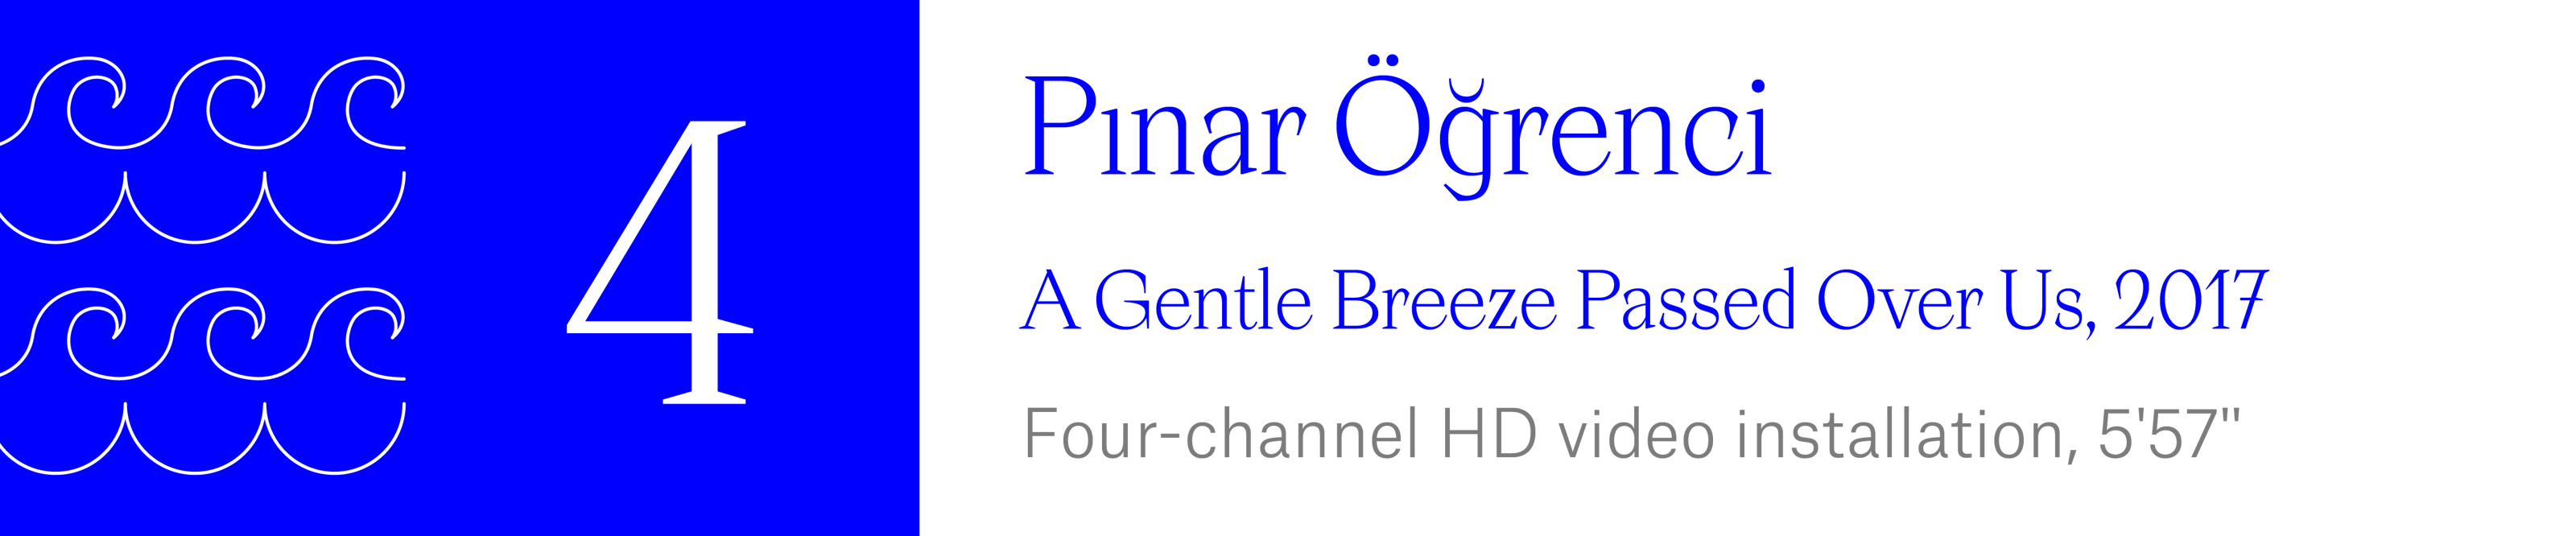 The Wave (4) - Pınar Öğrenciç A Gentle Breeze Passed Over Us, 2017, four-channel HD video installation, 5 minutes, 57 seconds